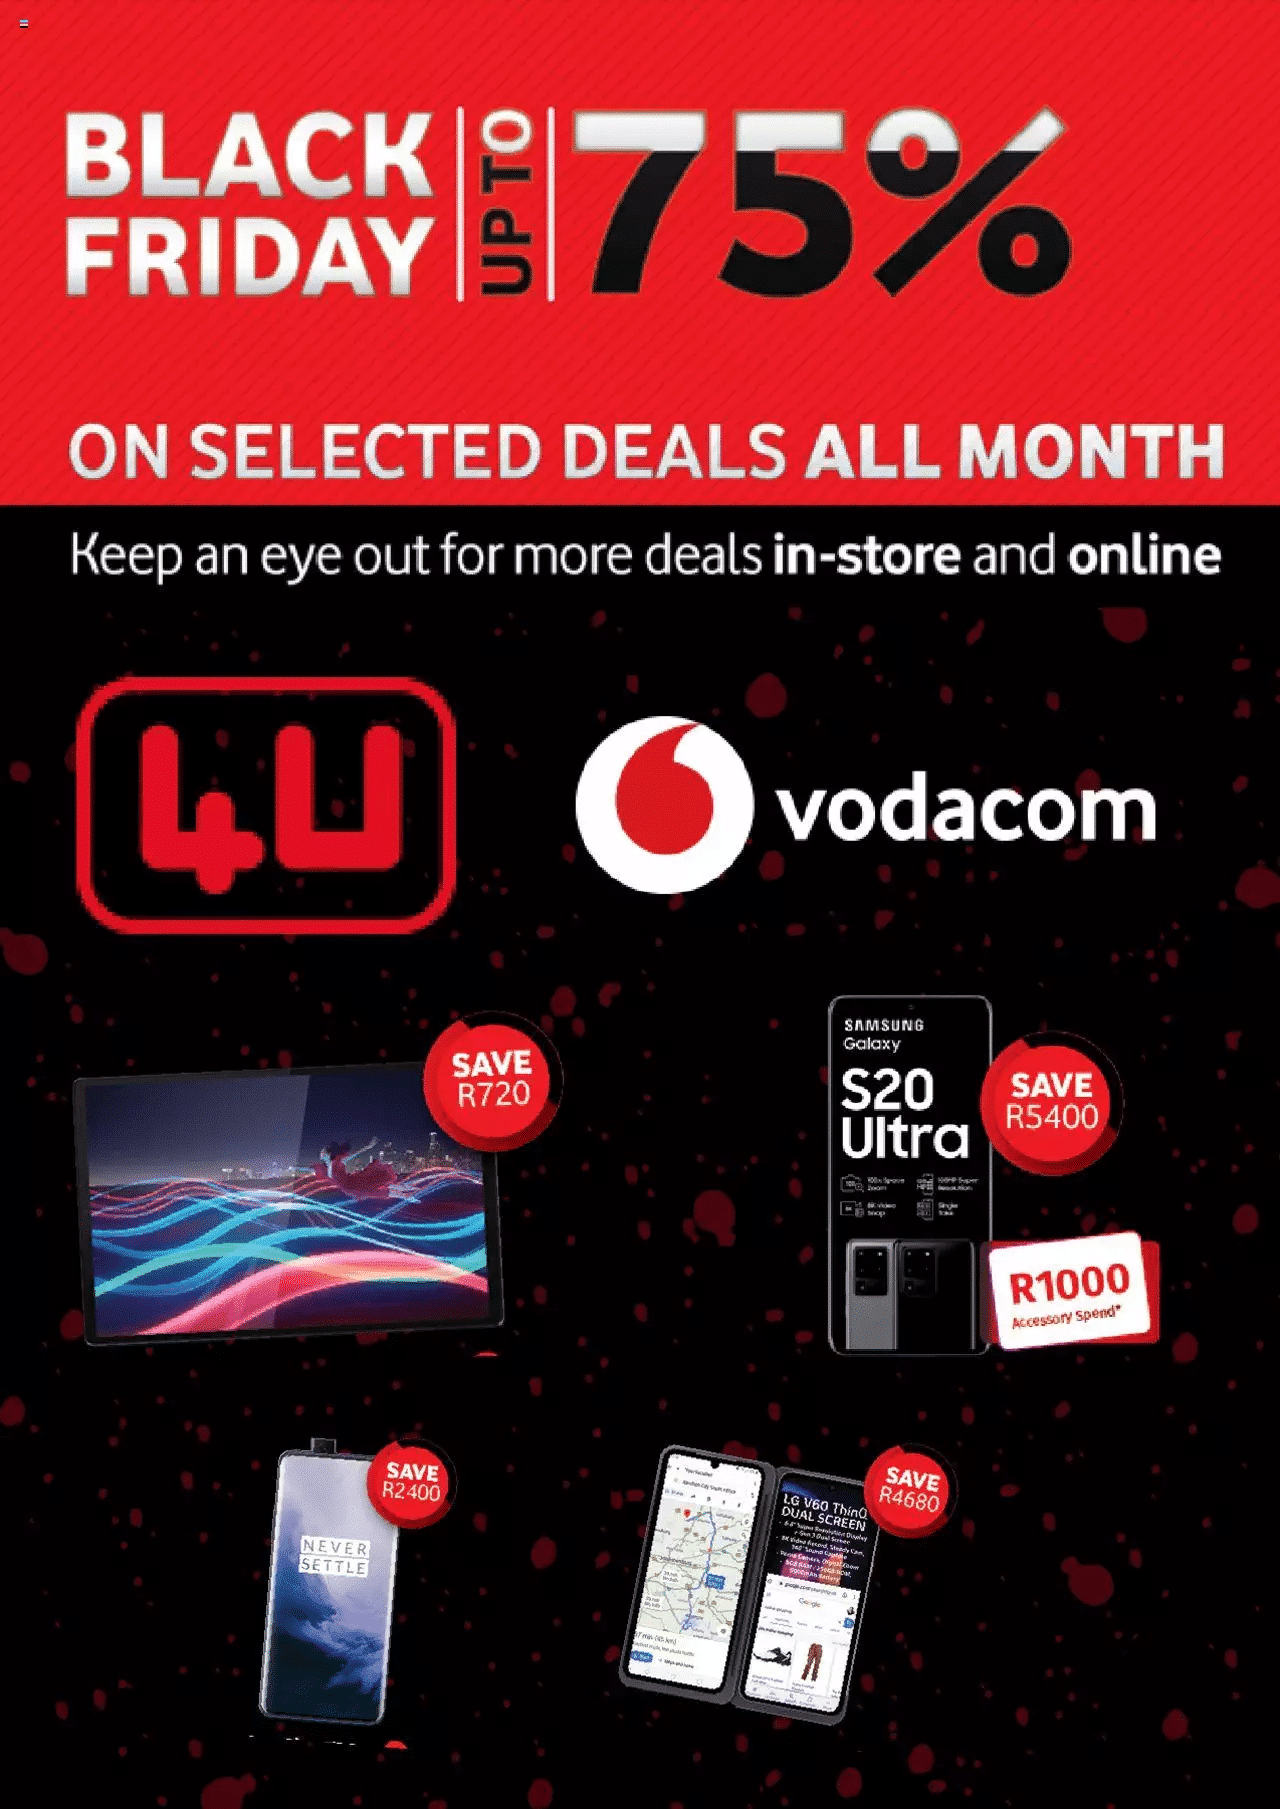 Vodacom Black Friday Deals & Specials 2021 - When To Black Friday Deals End